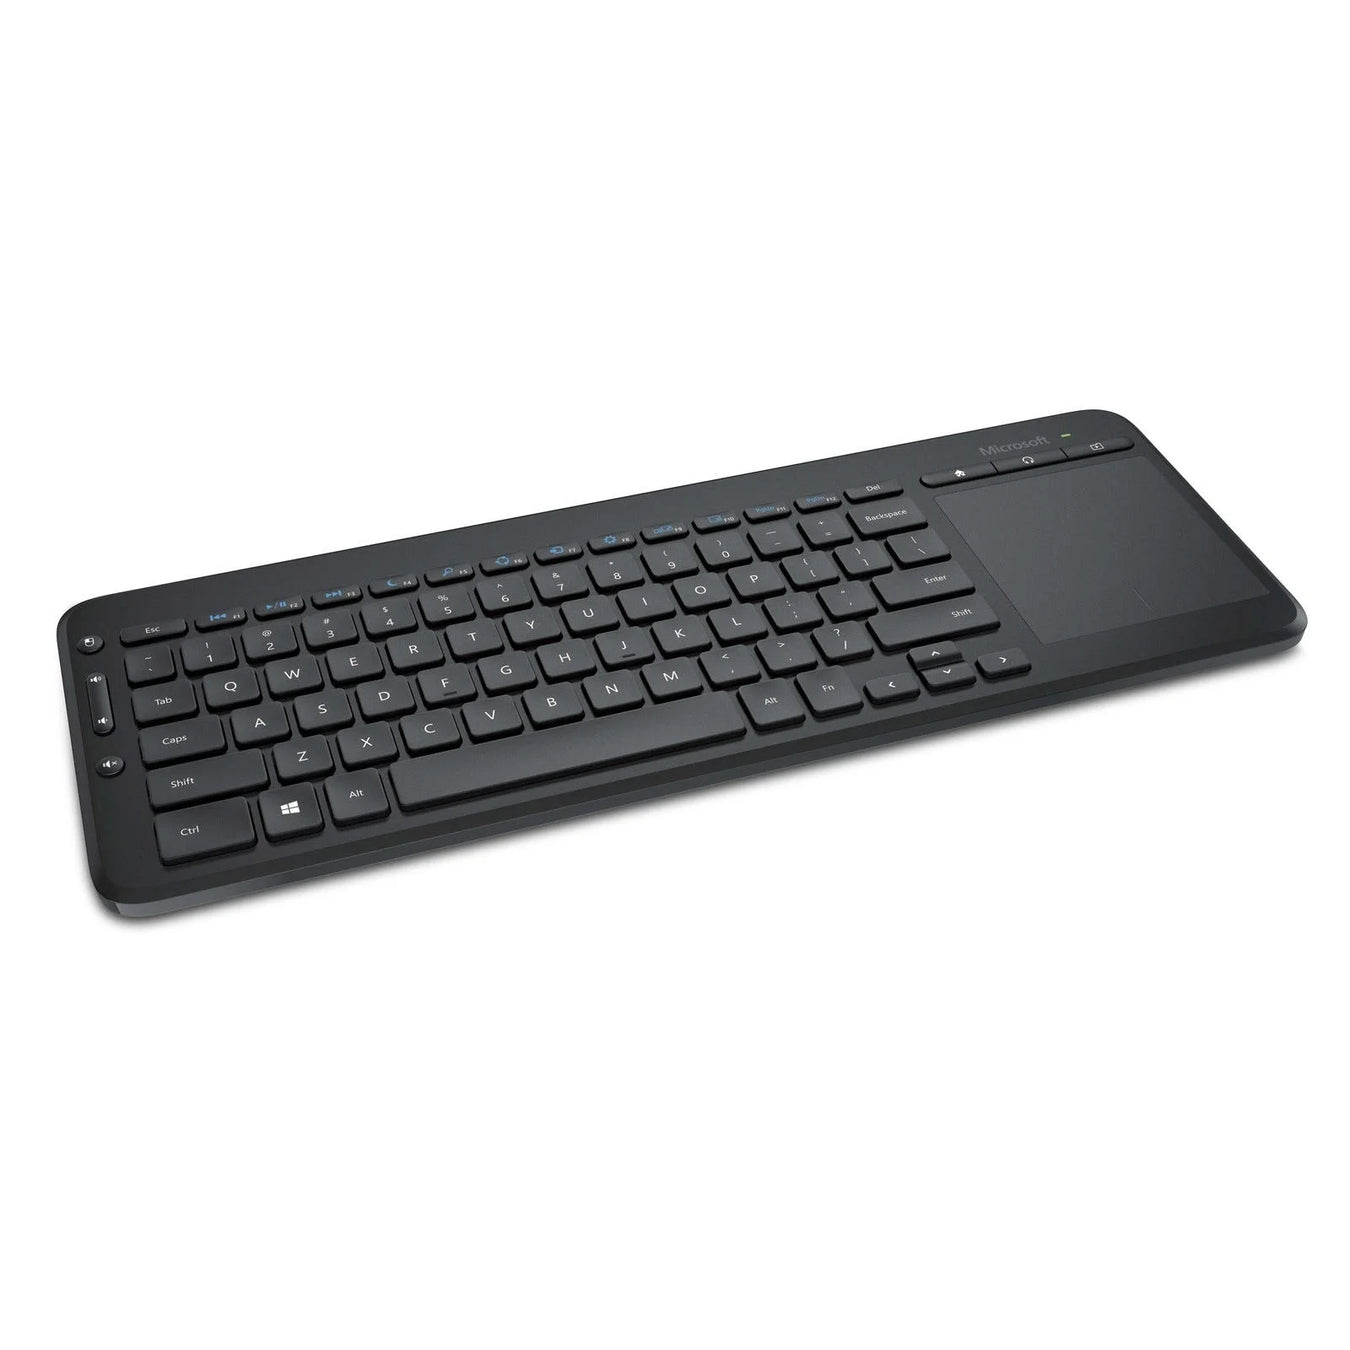 Microsoft's Wireless Keyboard